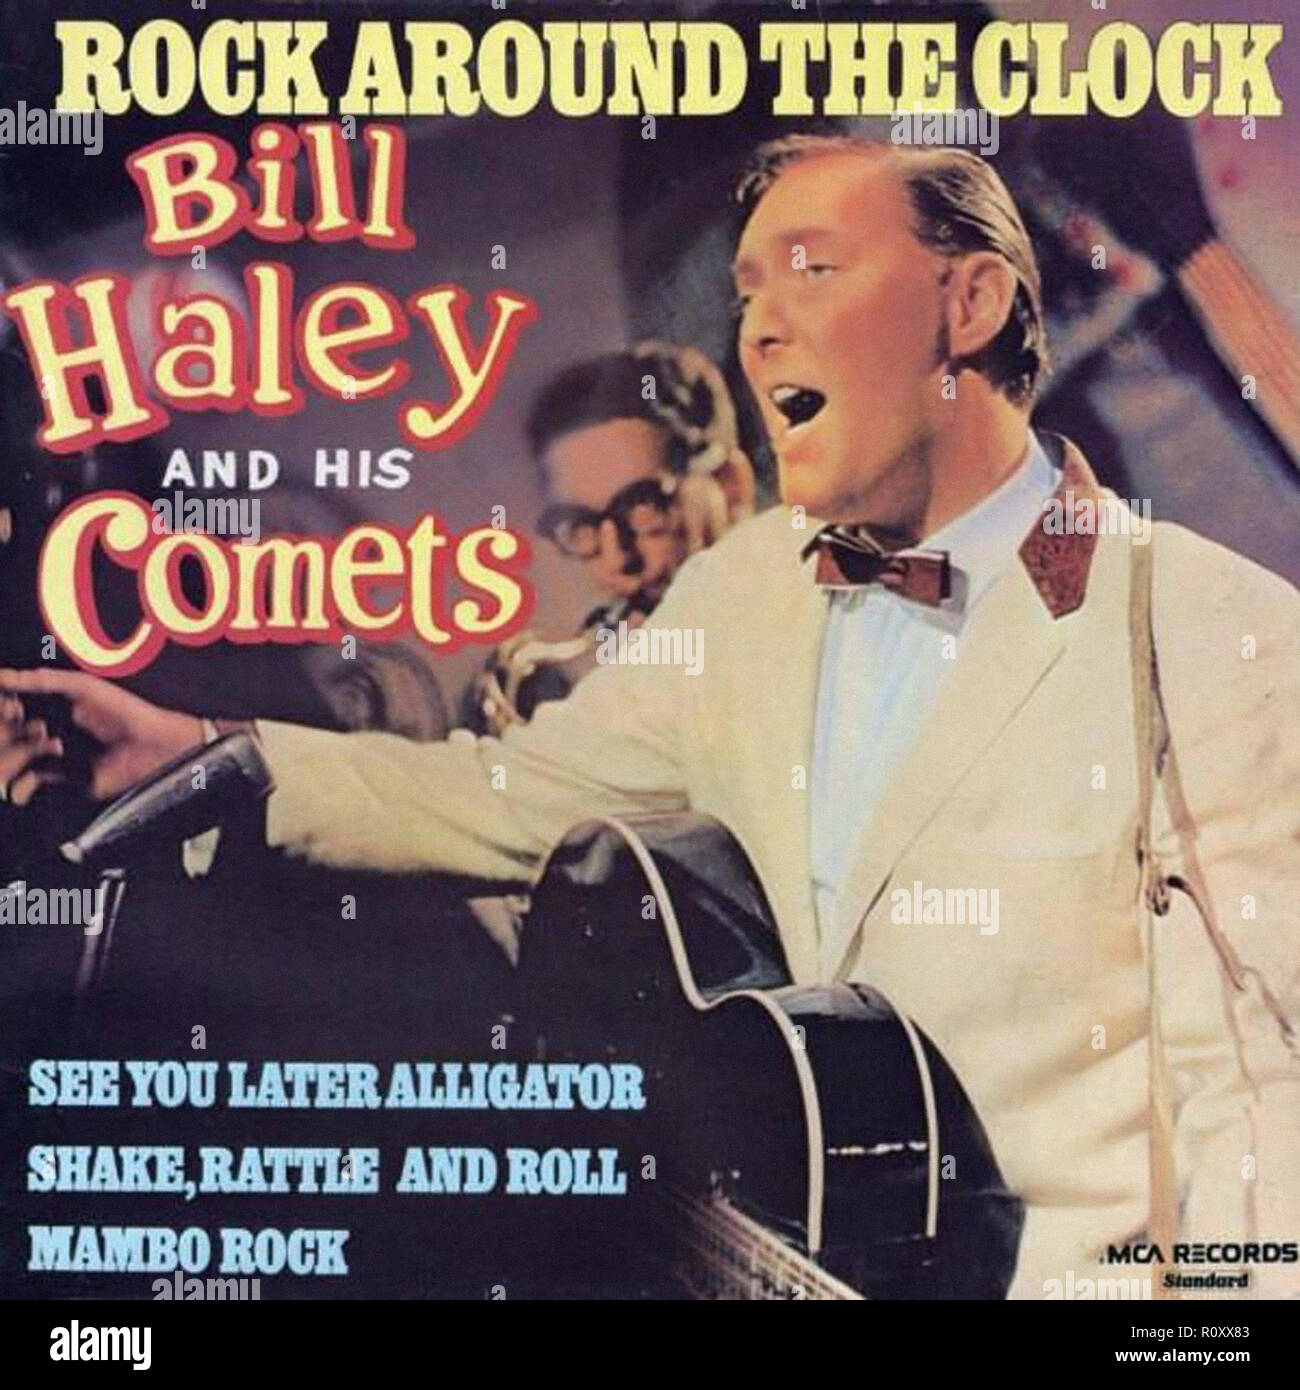 ROCK AROUND THE CLOCK - BILL HALEY - Vintage cover album Stock Photo - Alamy